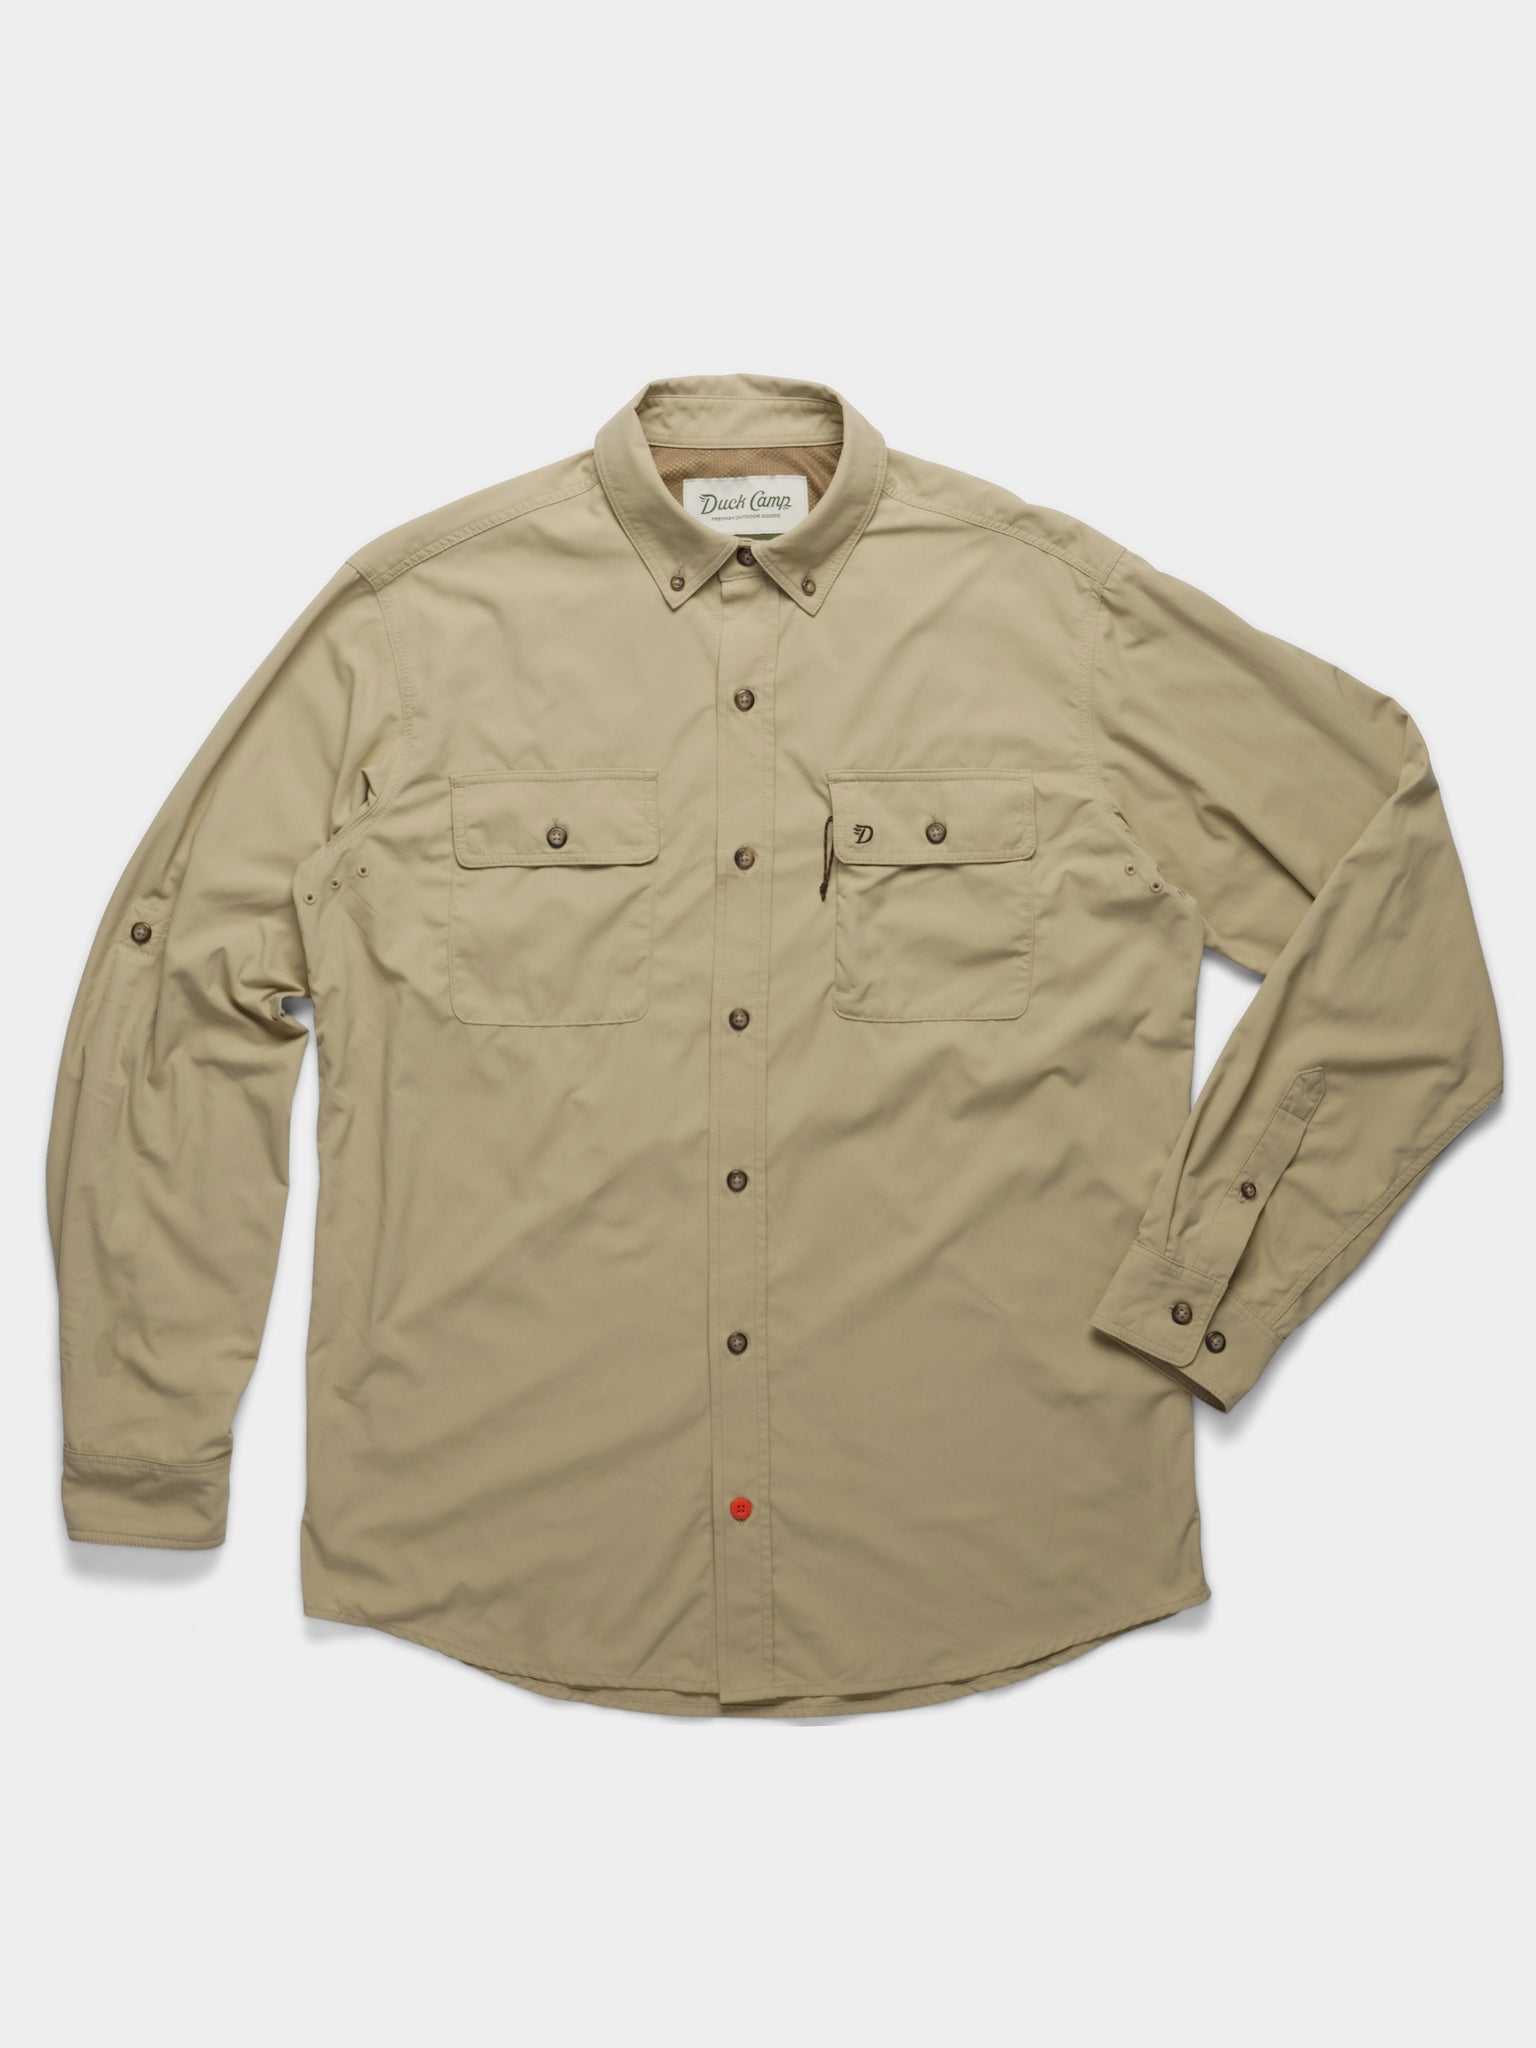 Lightweight Hunting Shirt Long Sleeve - Pumice